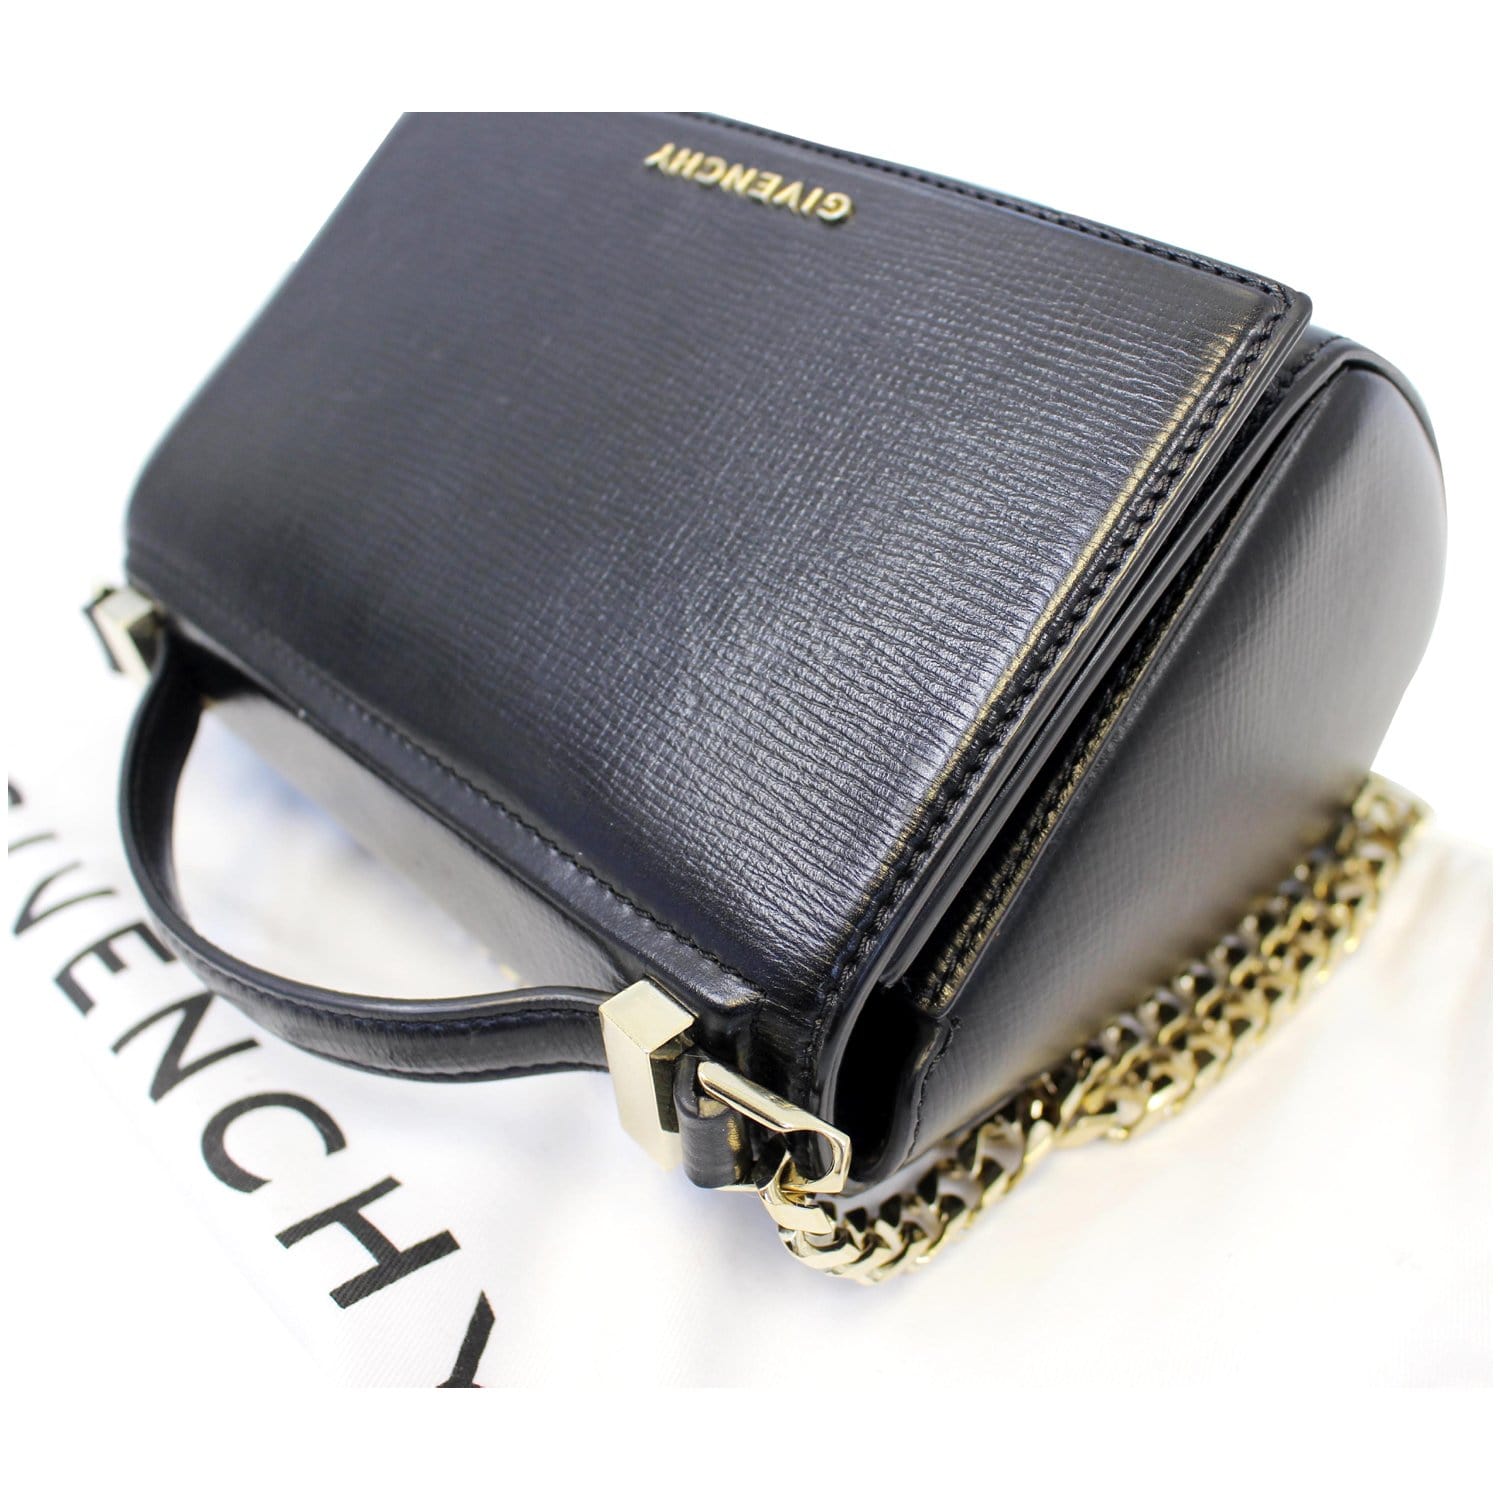 GIVENCHY Mini Pandora Box Calfskin Leather Chain Crossbody Bag 